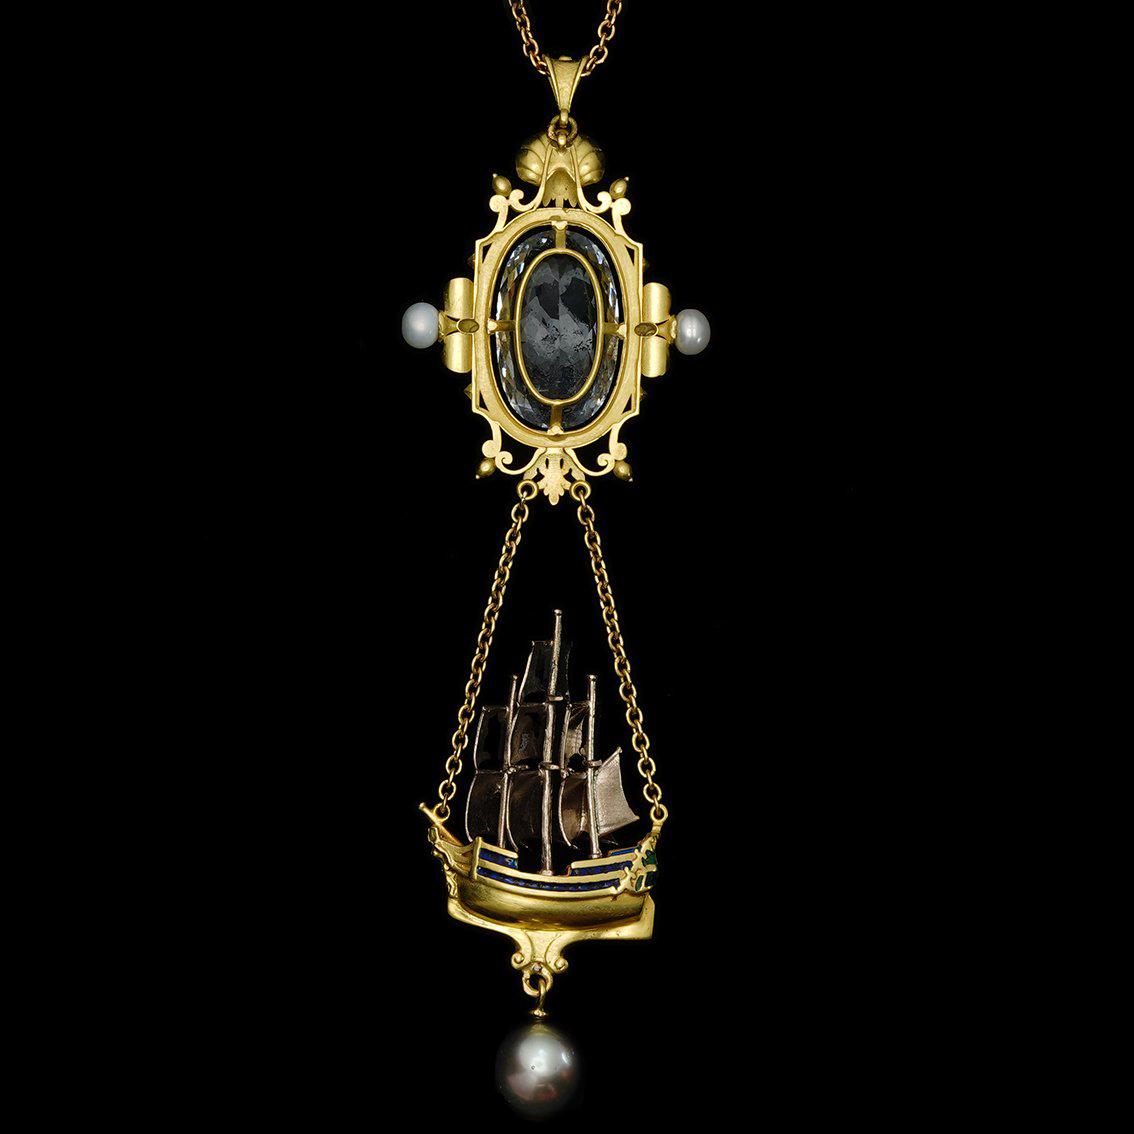 Aquamarine, Diamonds, Pearls, Enamel, 18kt Gold Antique Style Pendant Necklace For Sale 10